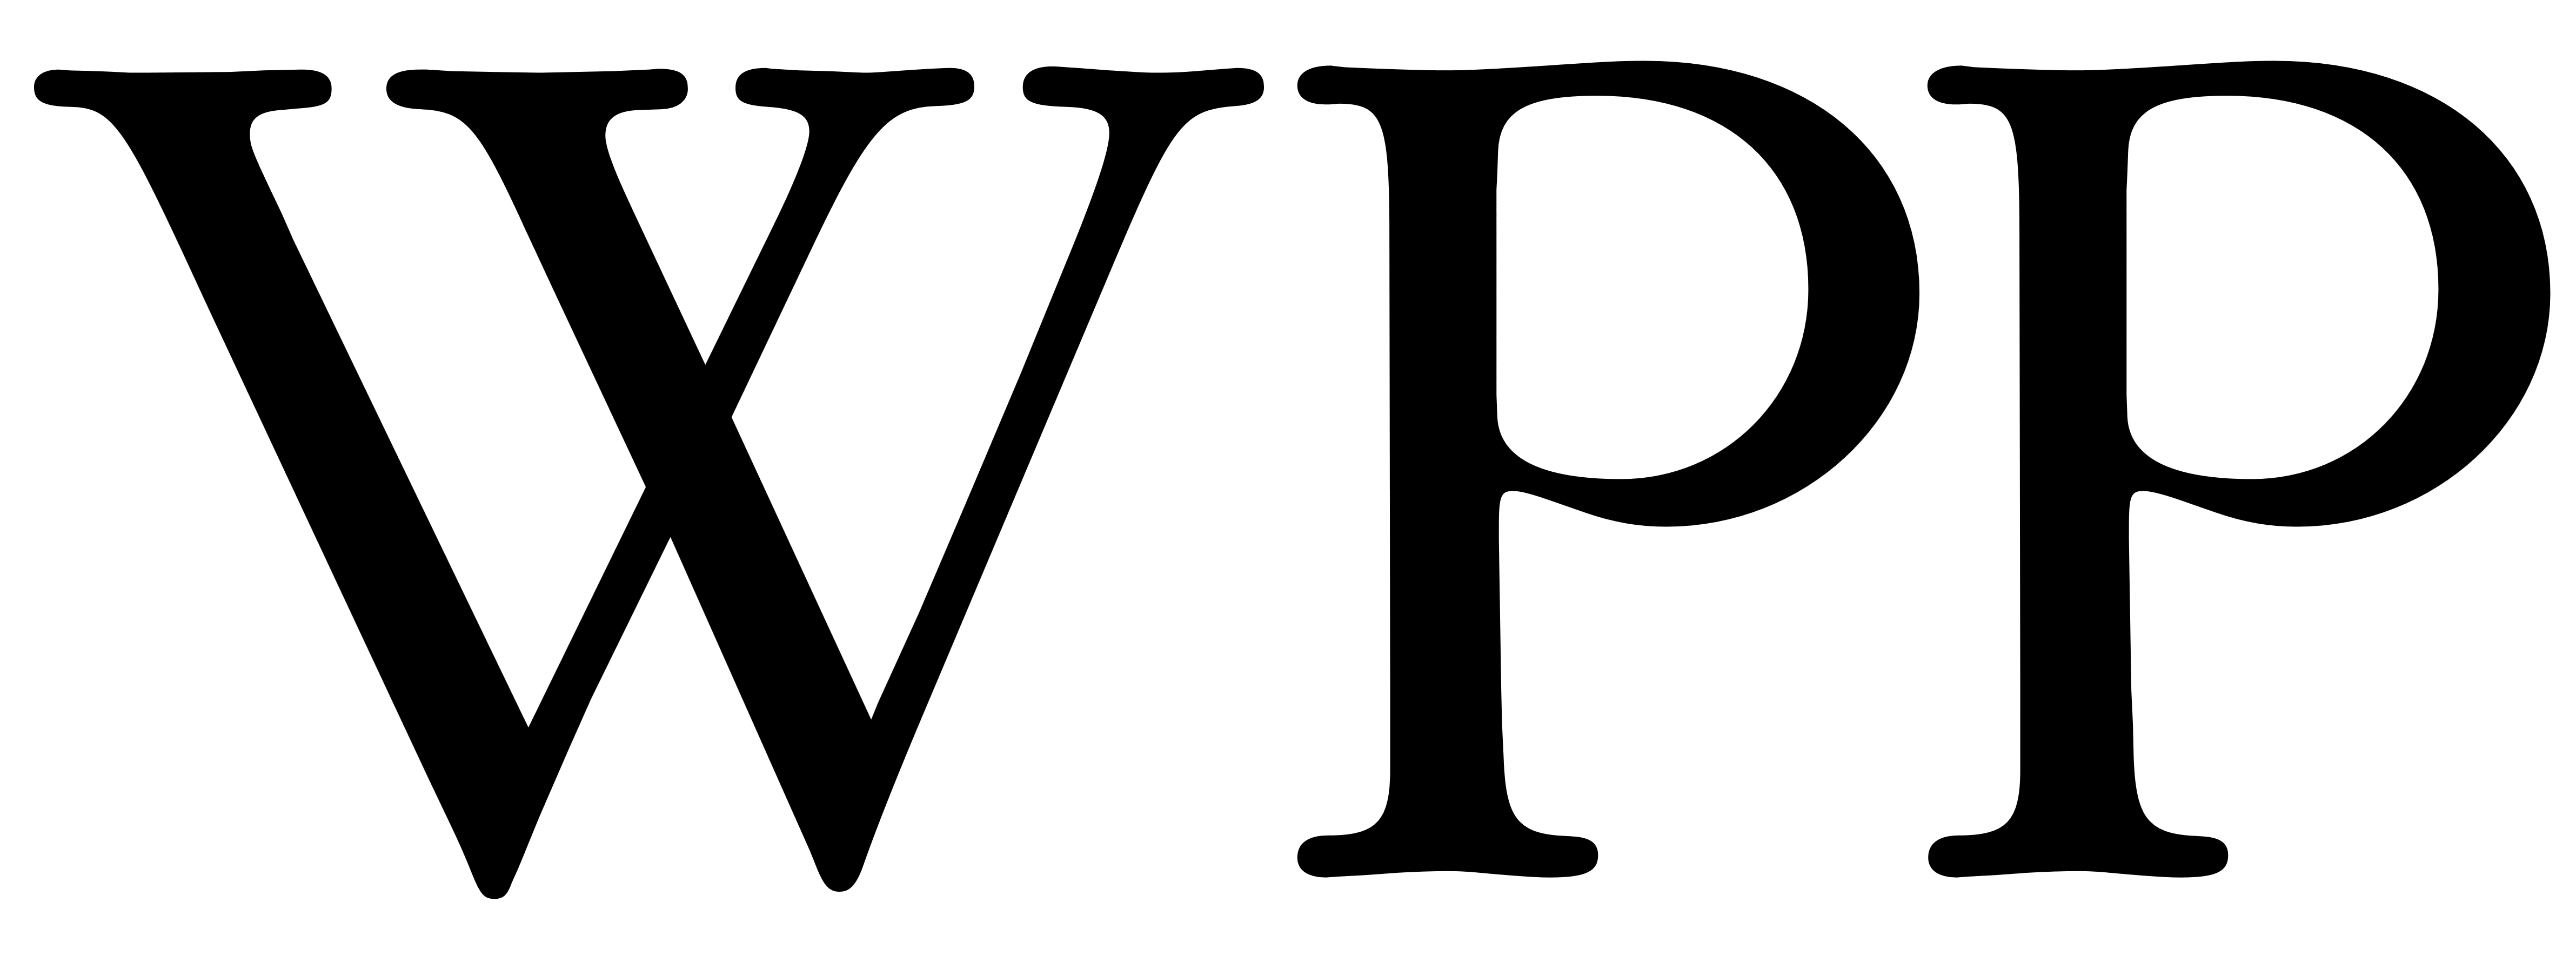 WPP logo, logotype